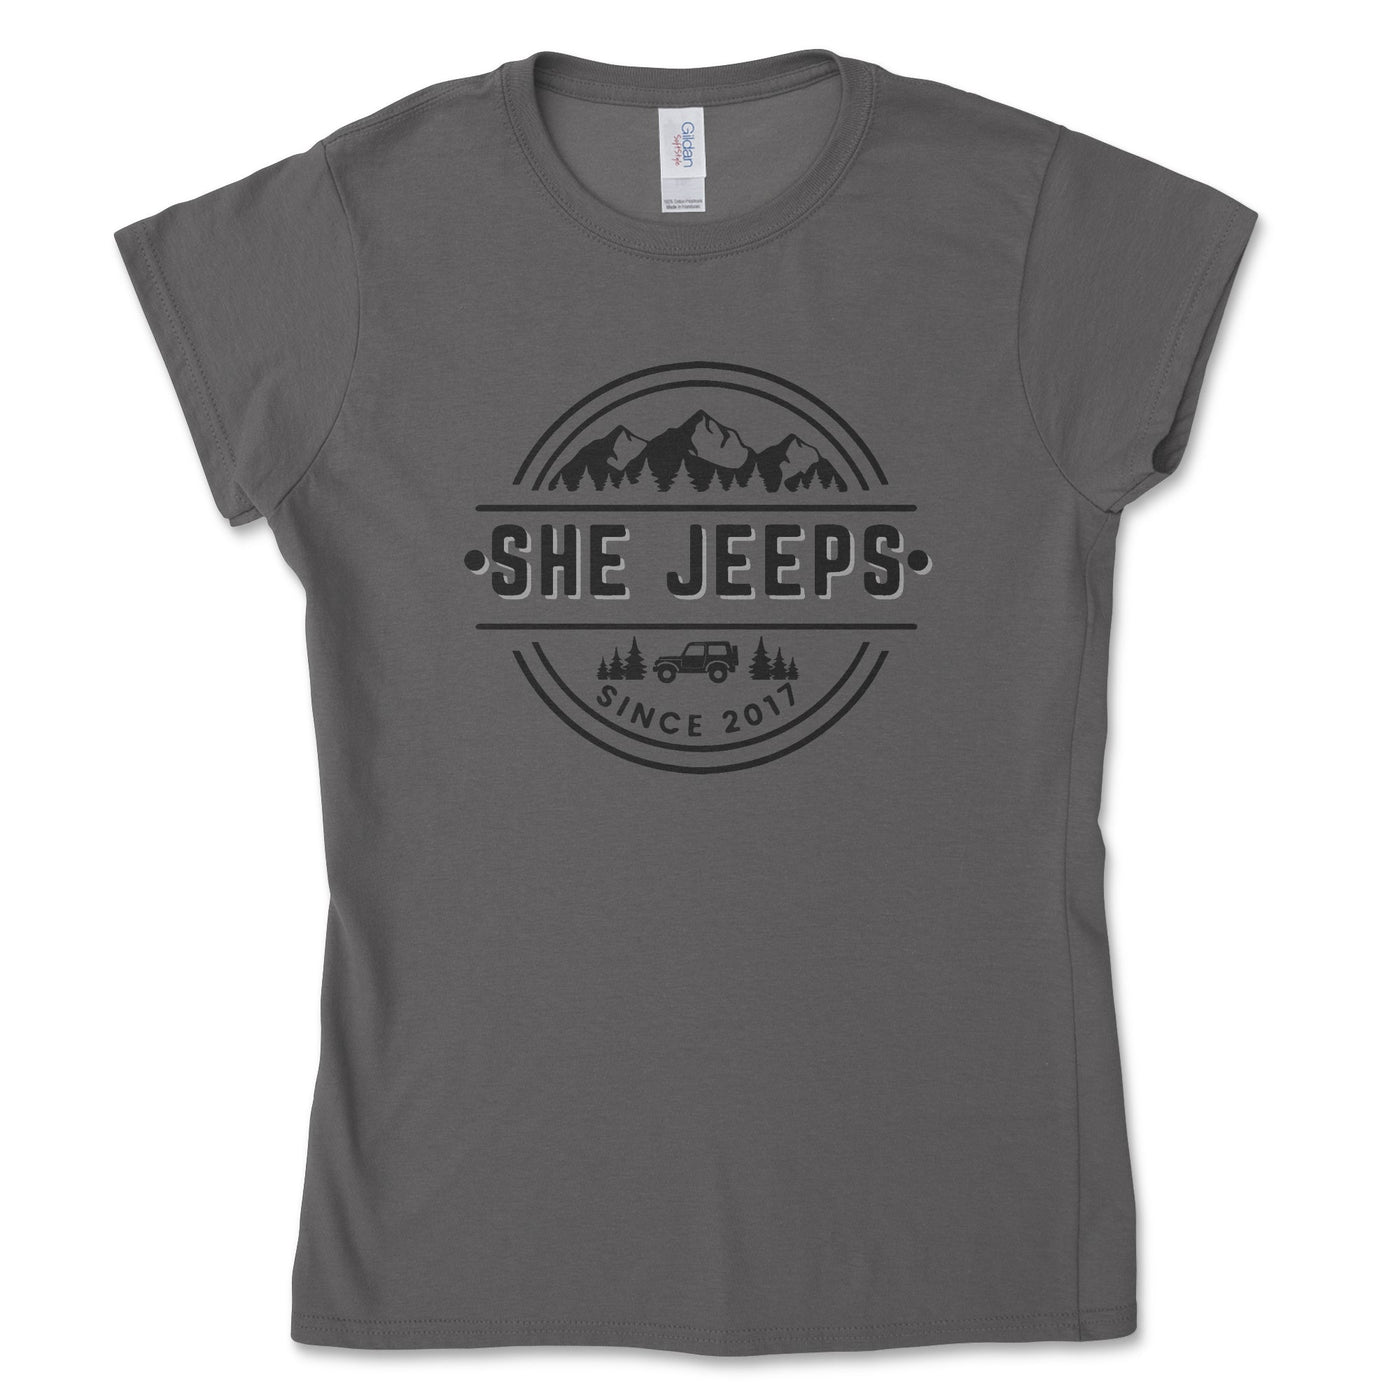 She Jeeps Women's Fit Tee - Goats Trail